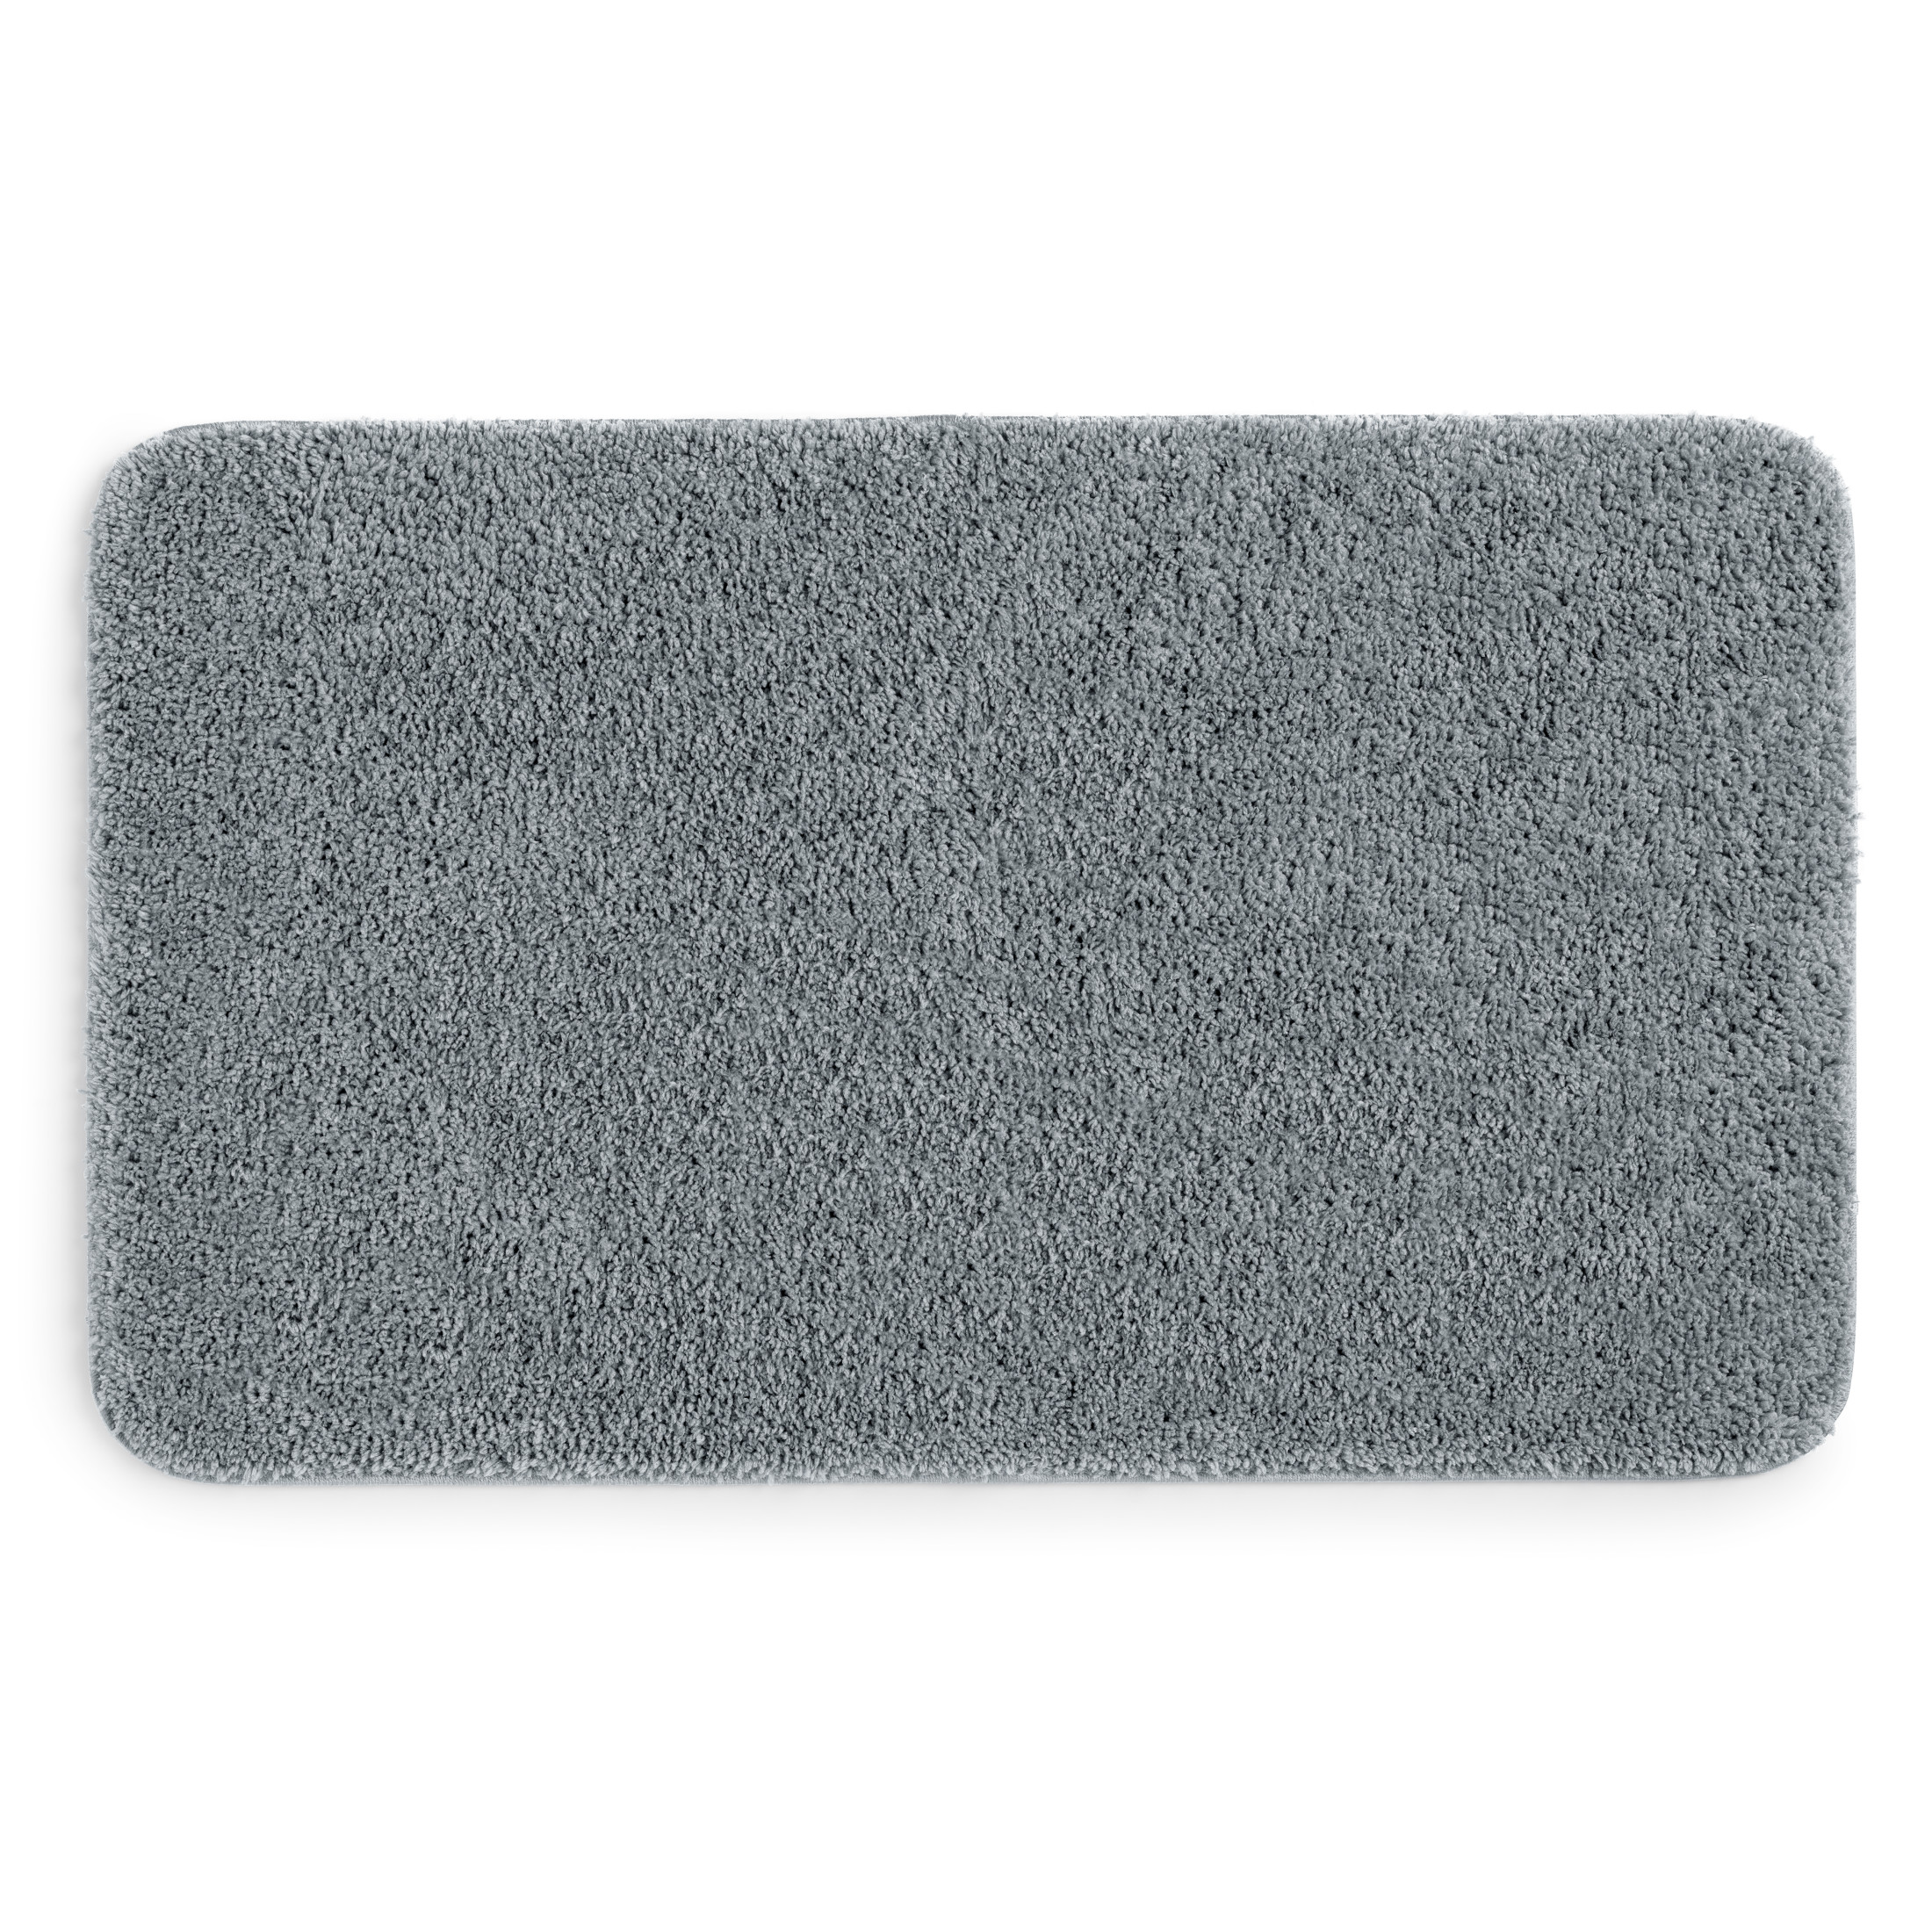 Mainstays Basic Grey Polyester Skid Resistant 24" x 40" Bath Rug - image 1 of 9